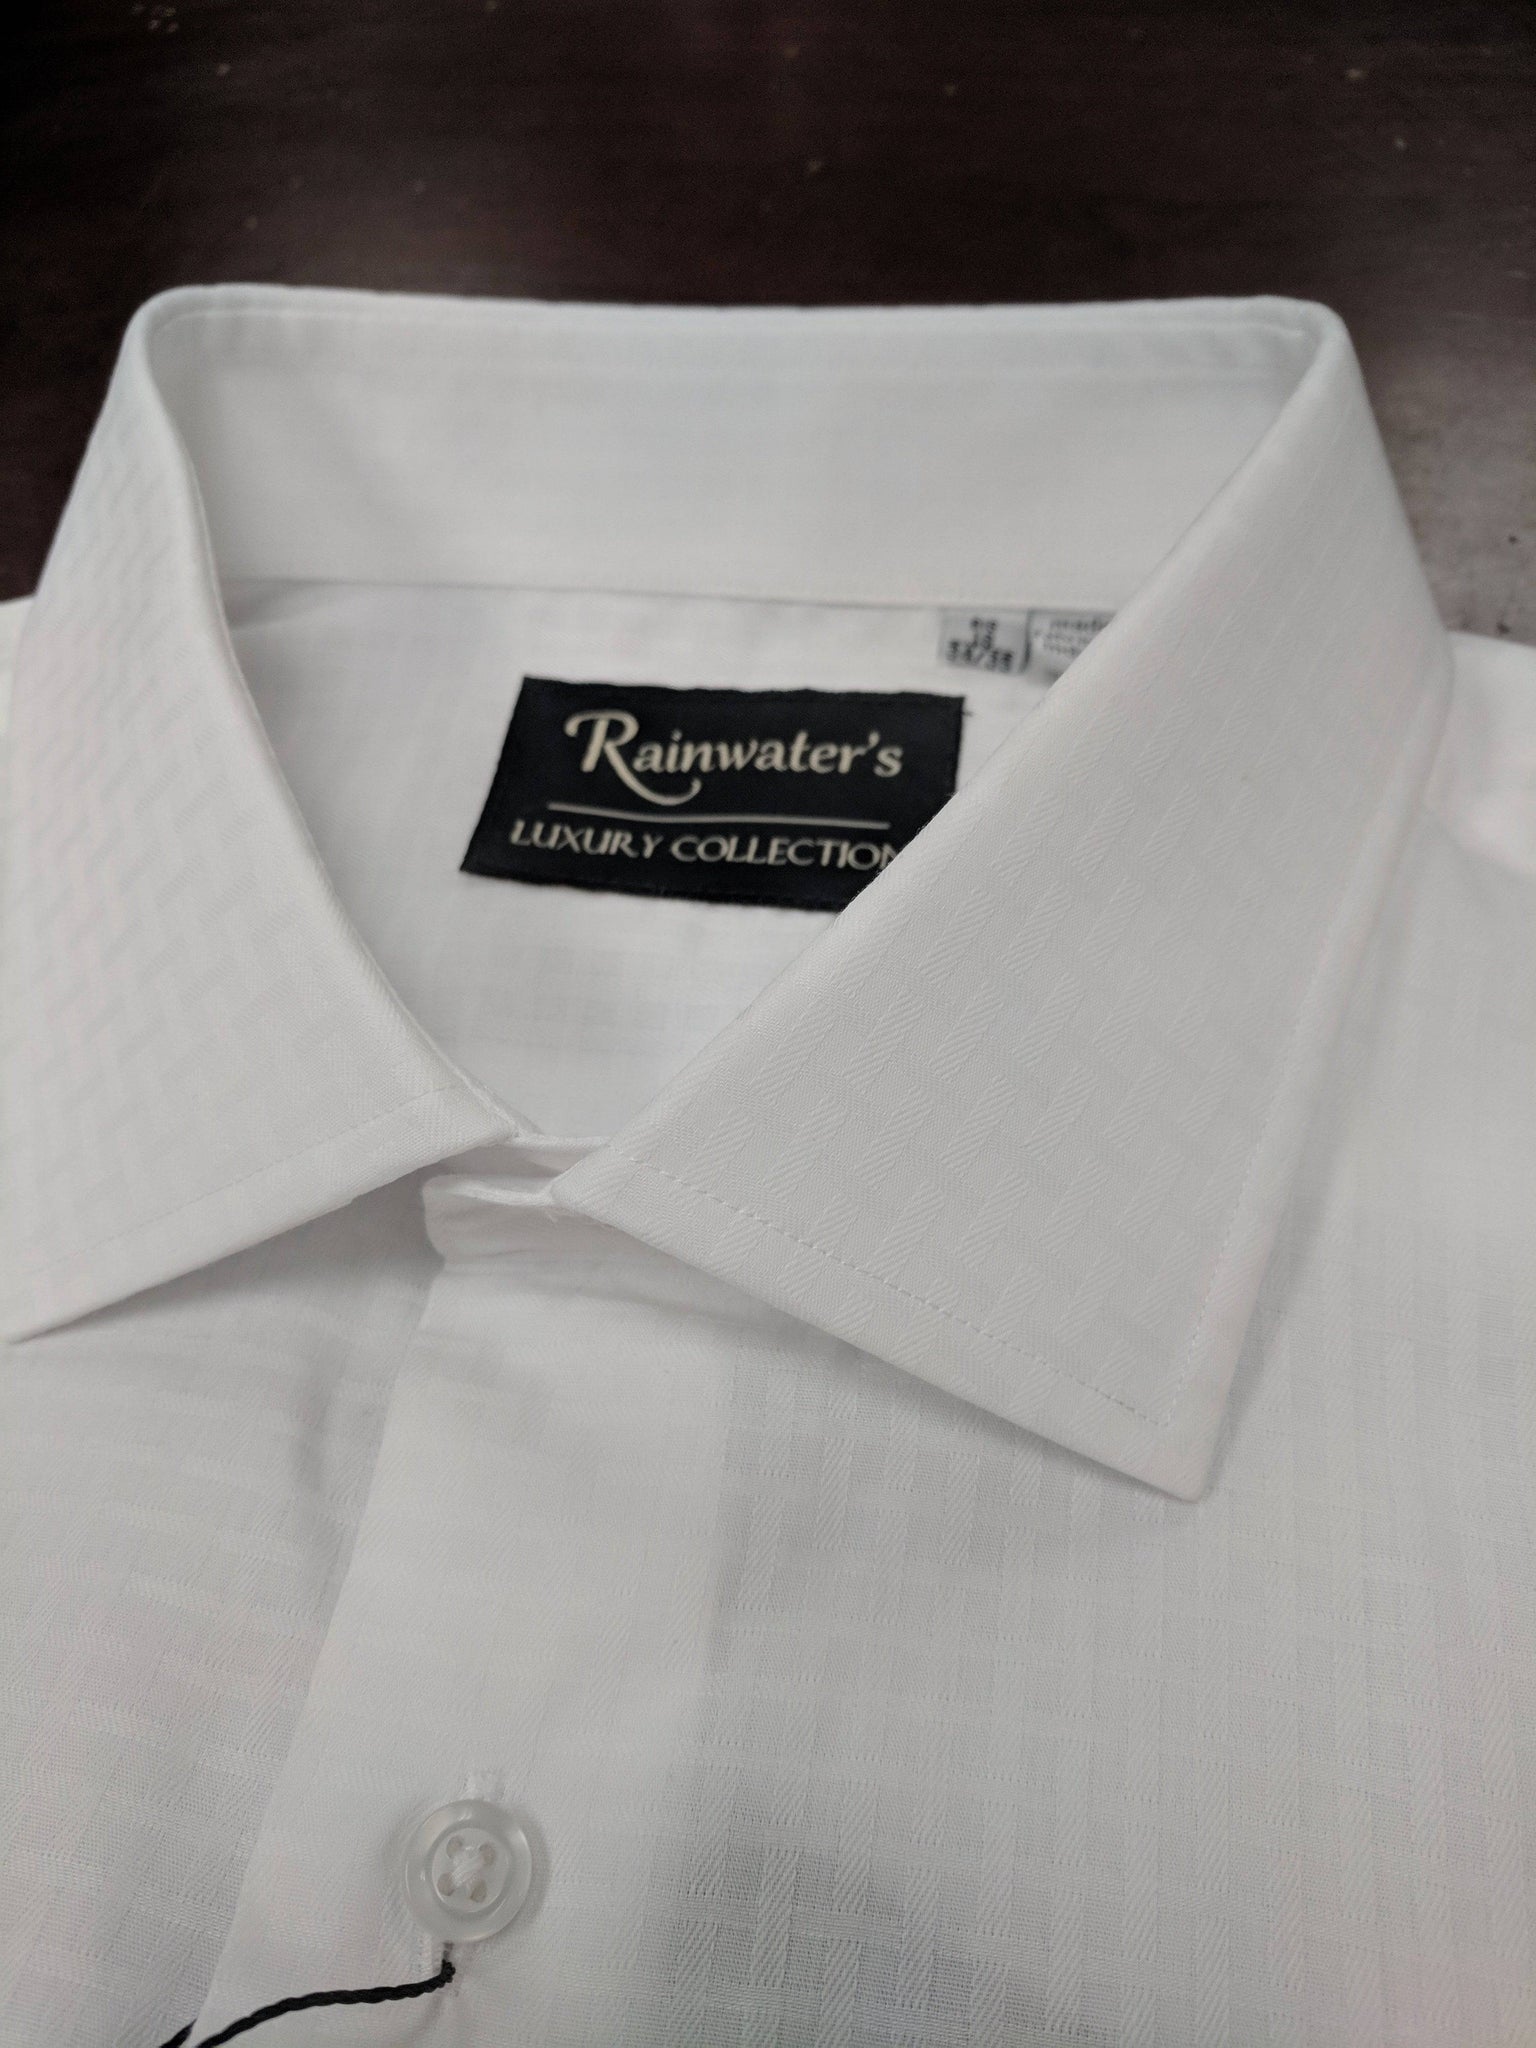 Rainwater's White Parquet Tone on Tone Dress Shirt - Rainwater's Men's Clothing and Tuxedo Rental